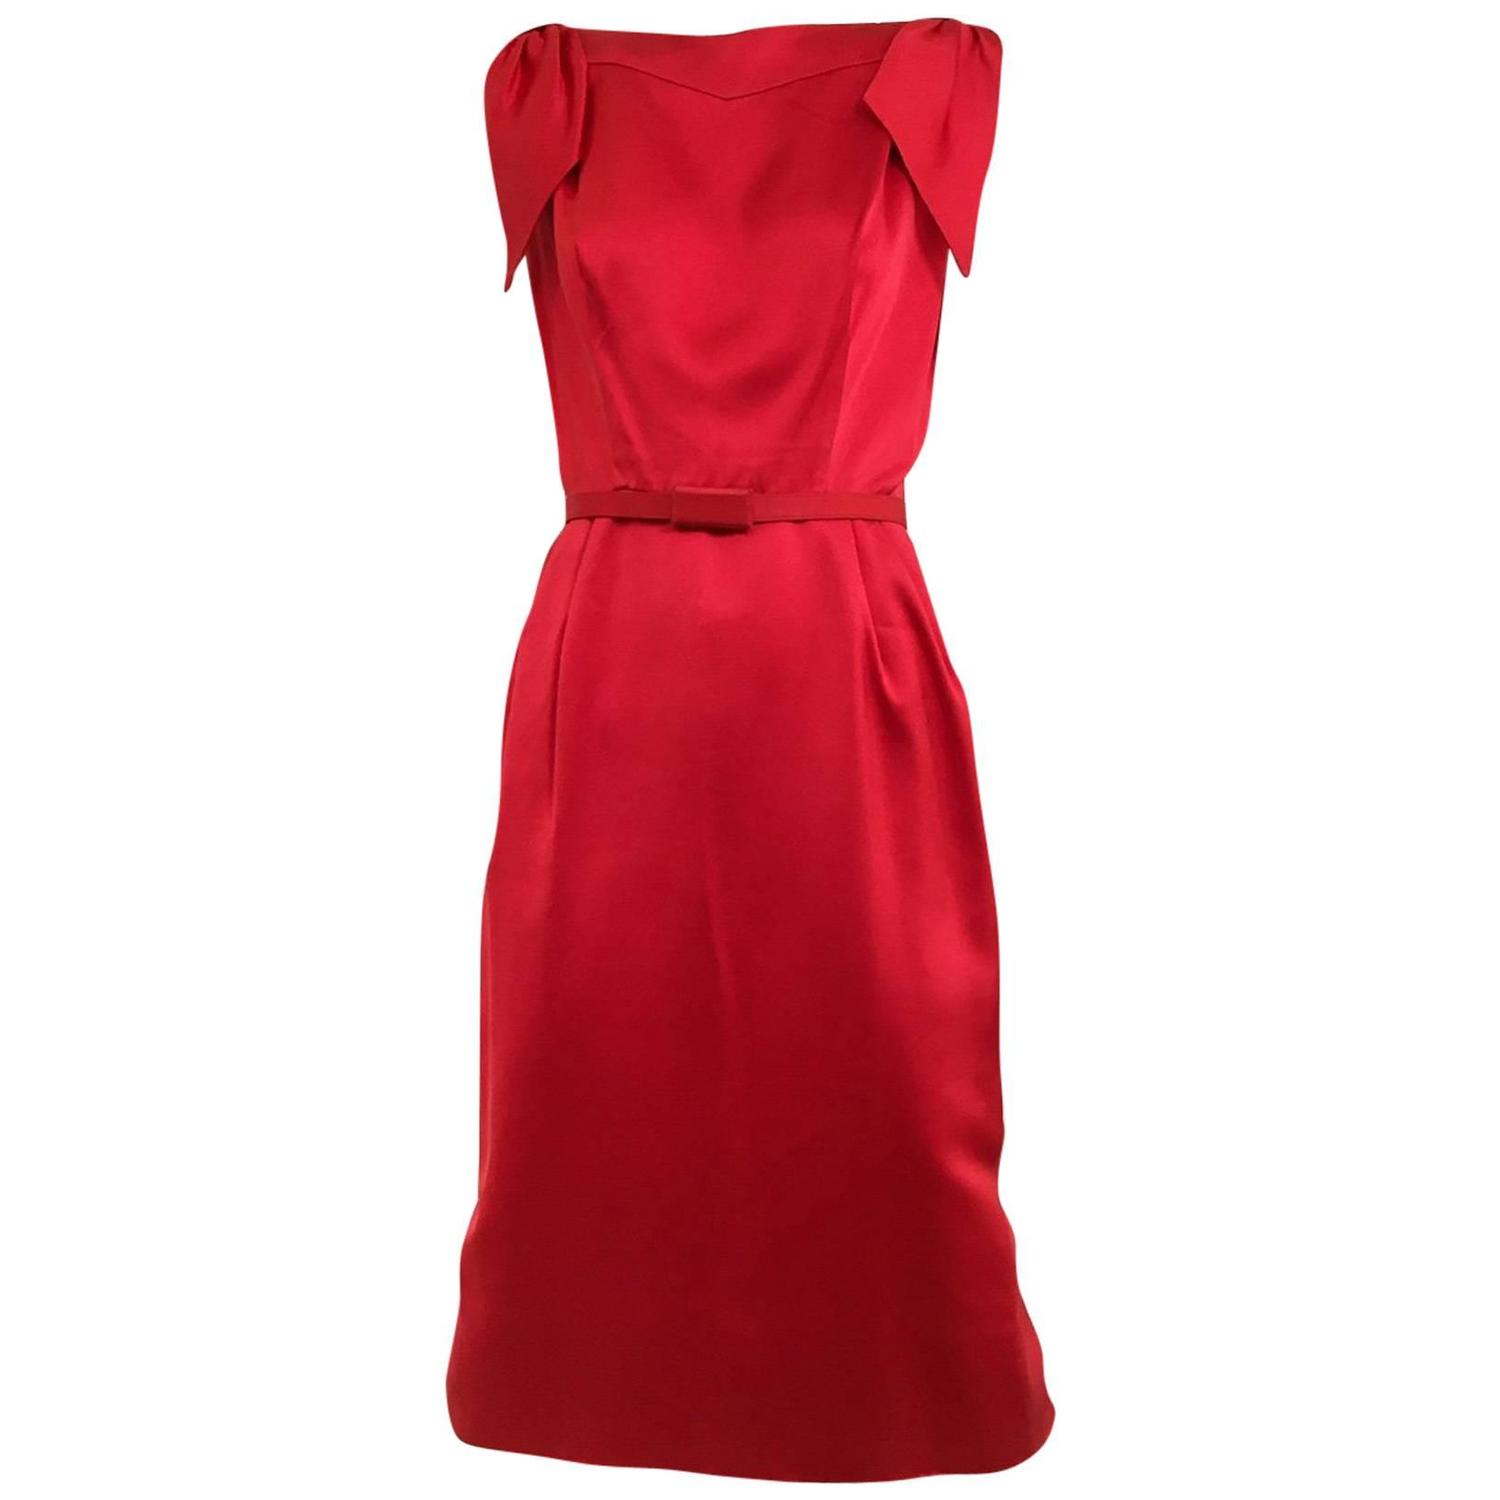 1960s Don Loper red sheath satin cocktail dress For Sale at 1stdibs